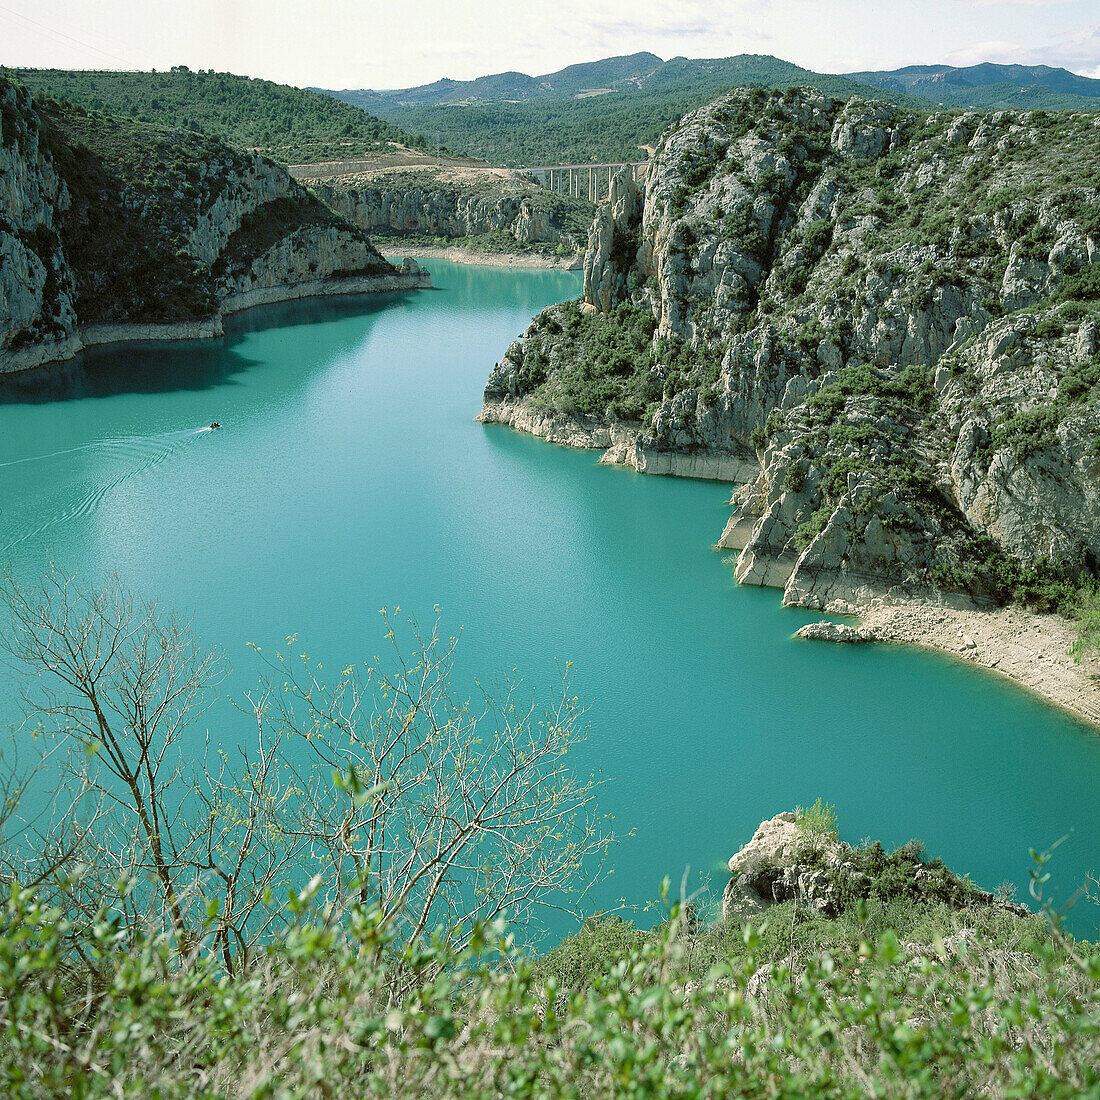 Cinca River and El Grado reservoir, view from Torreciudad. Huesca province. Spain